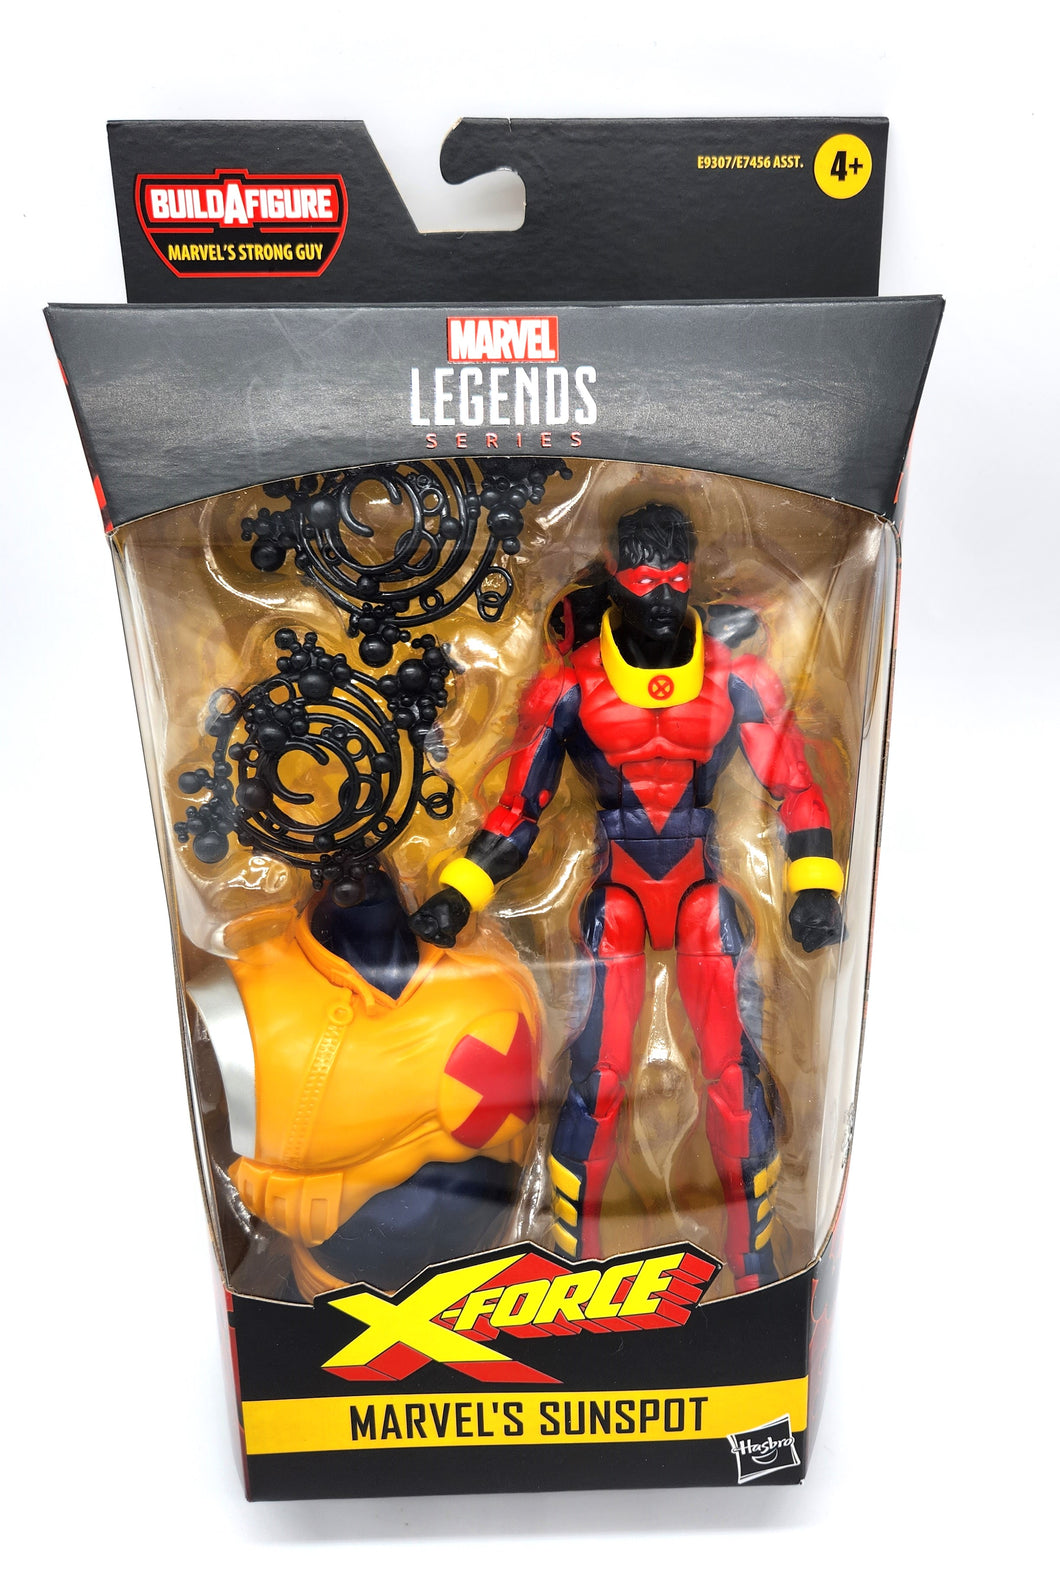 Build a Figure Marvel Legends Series X-Force Marvel's Sunspot strong guy